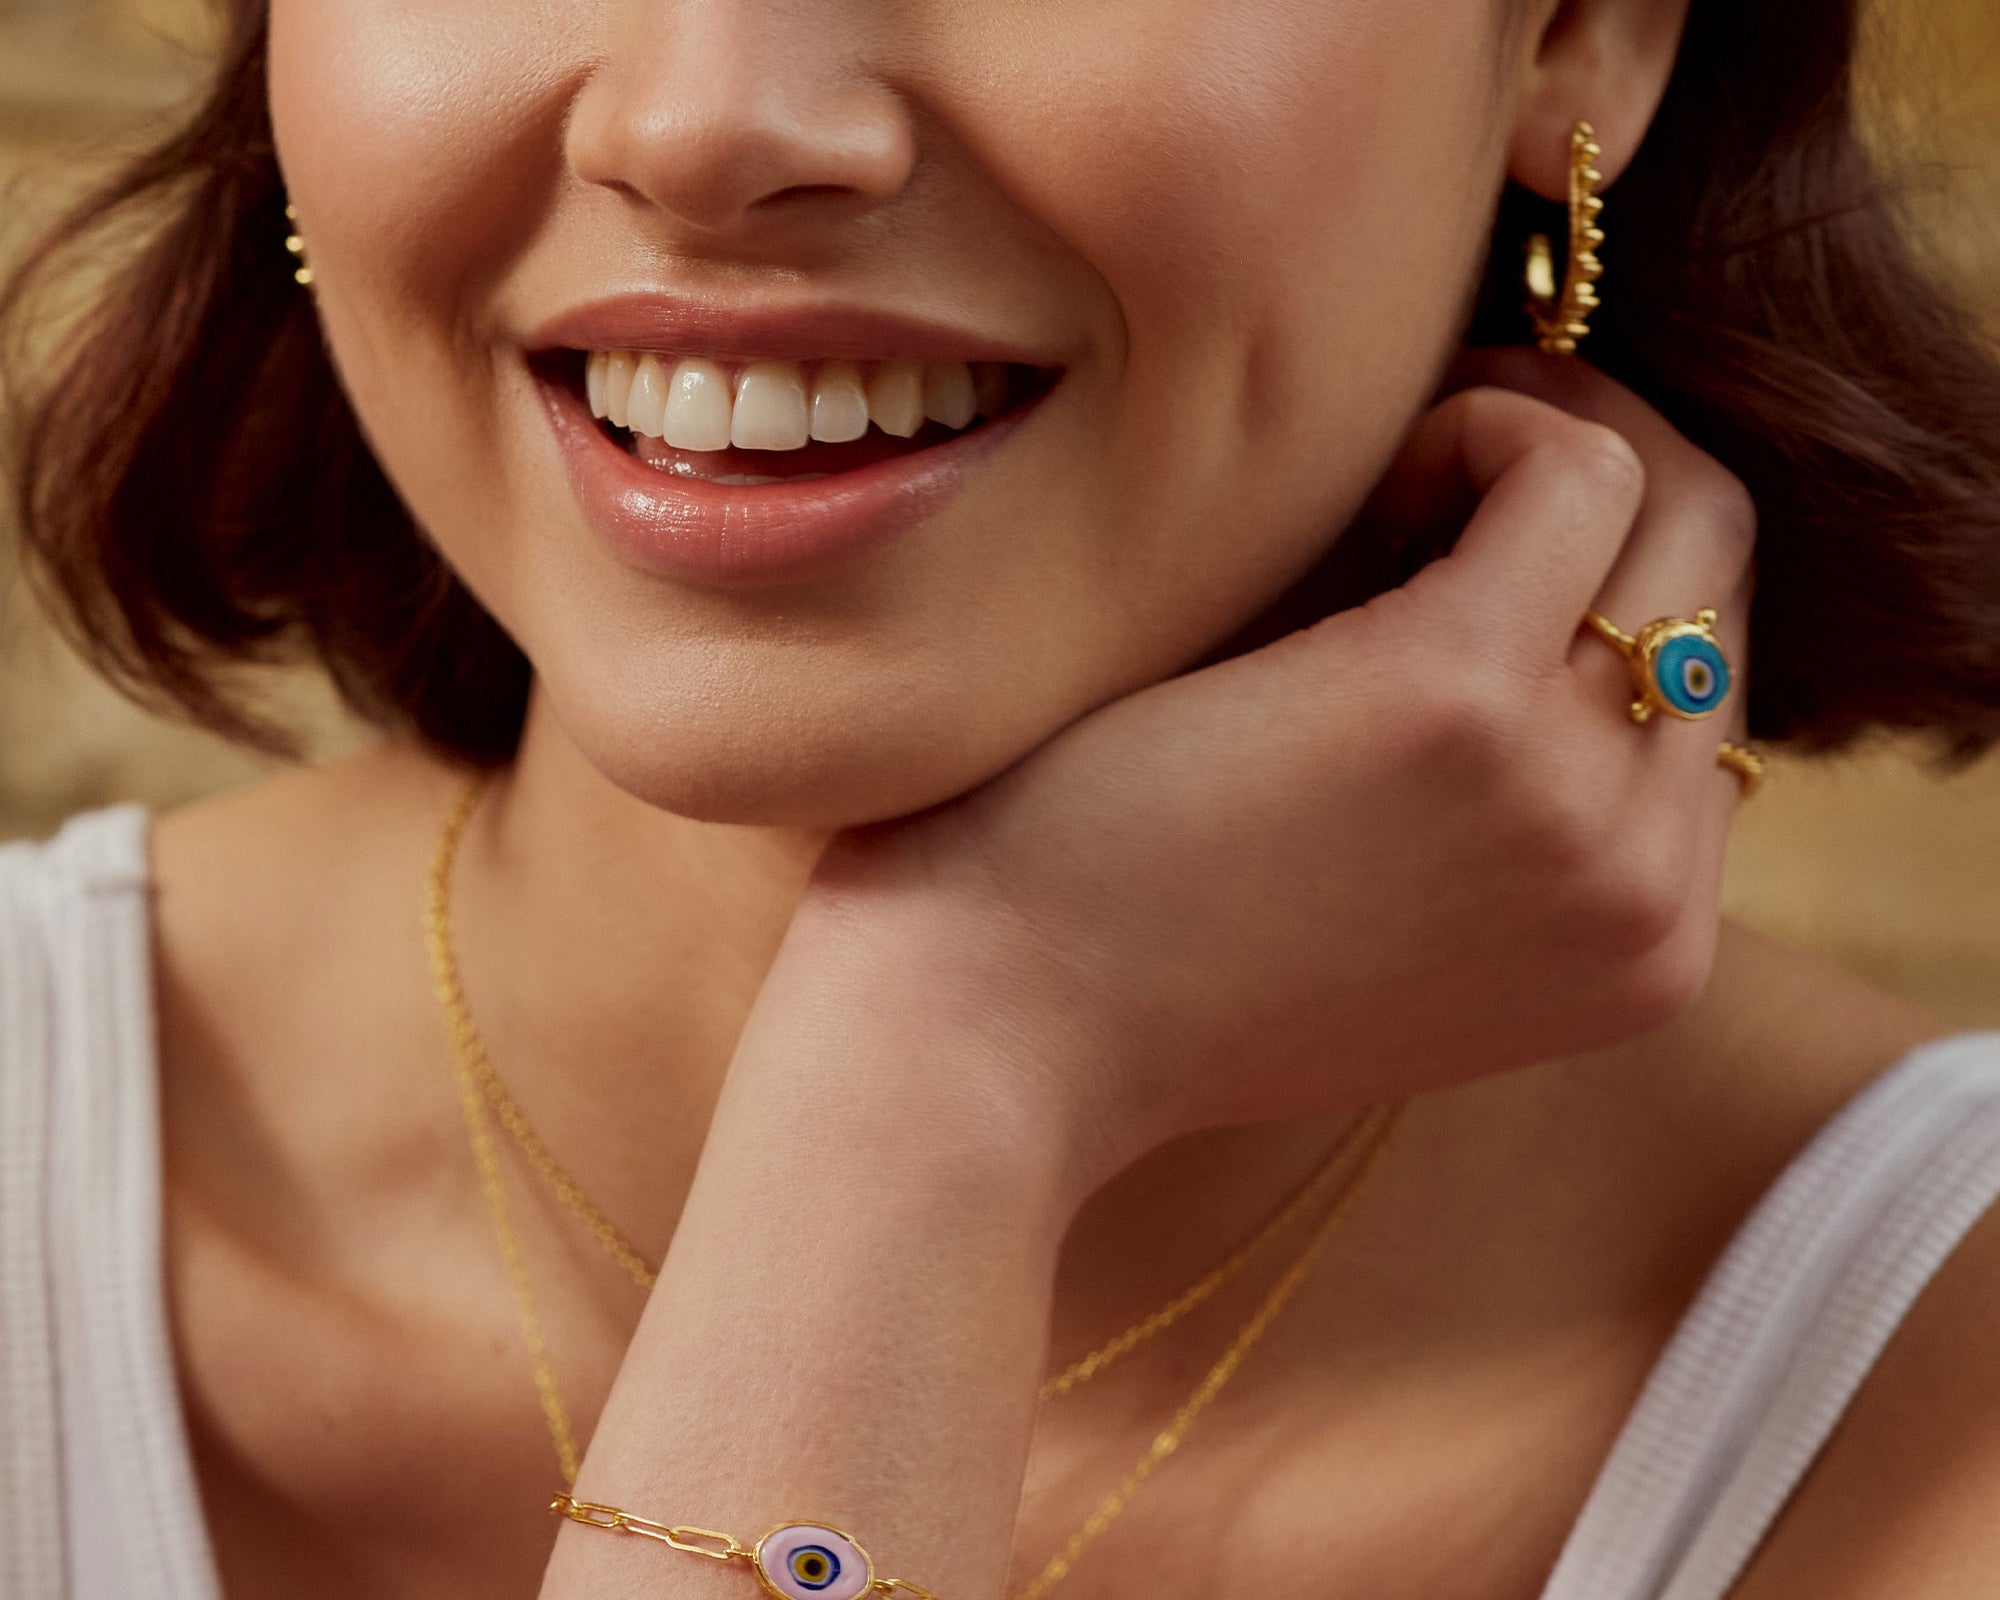 Alara Blue Evil Eye Bracelet | Sustainable Jewellery by Ottoman Hands